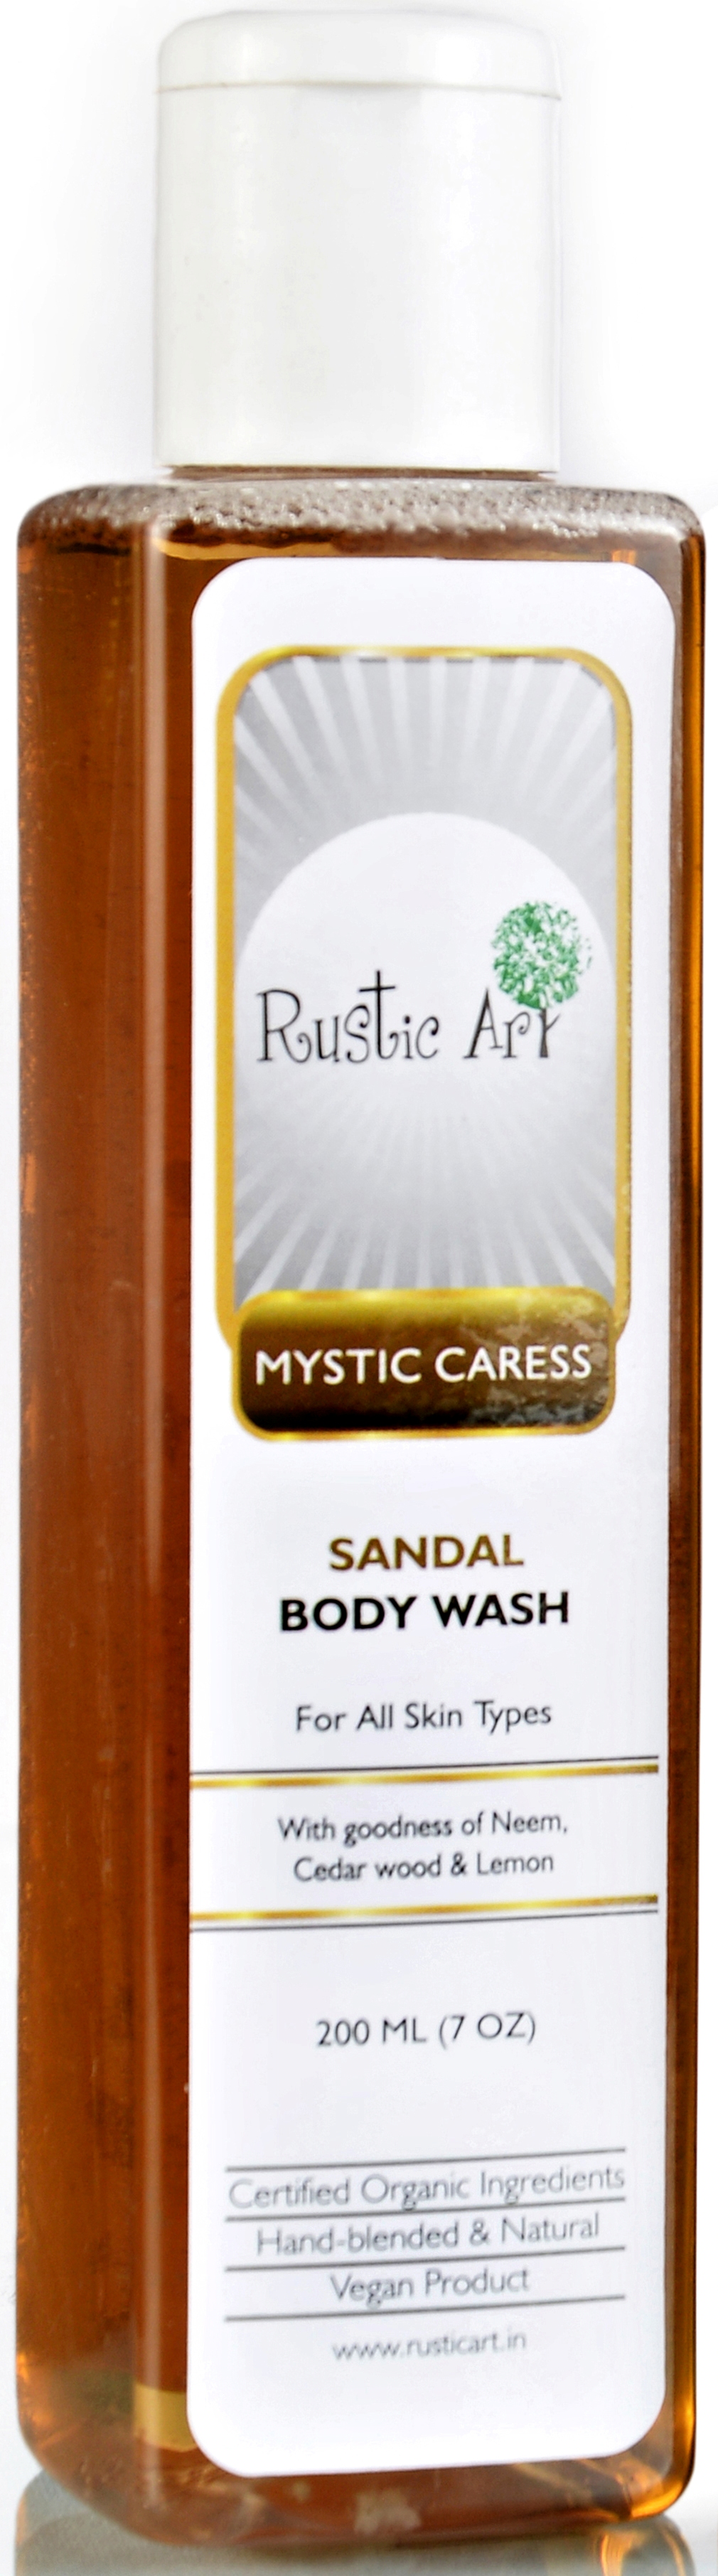 Rustic Art Organic Sandal Body Wash